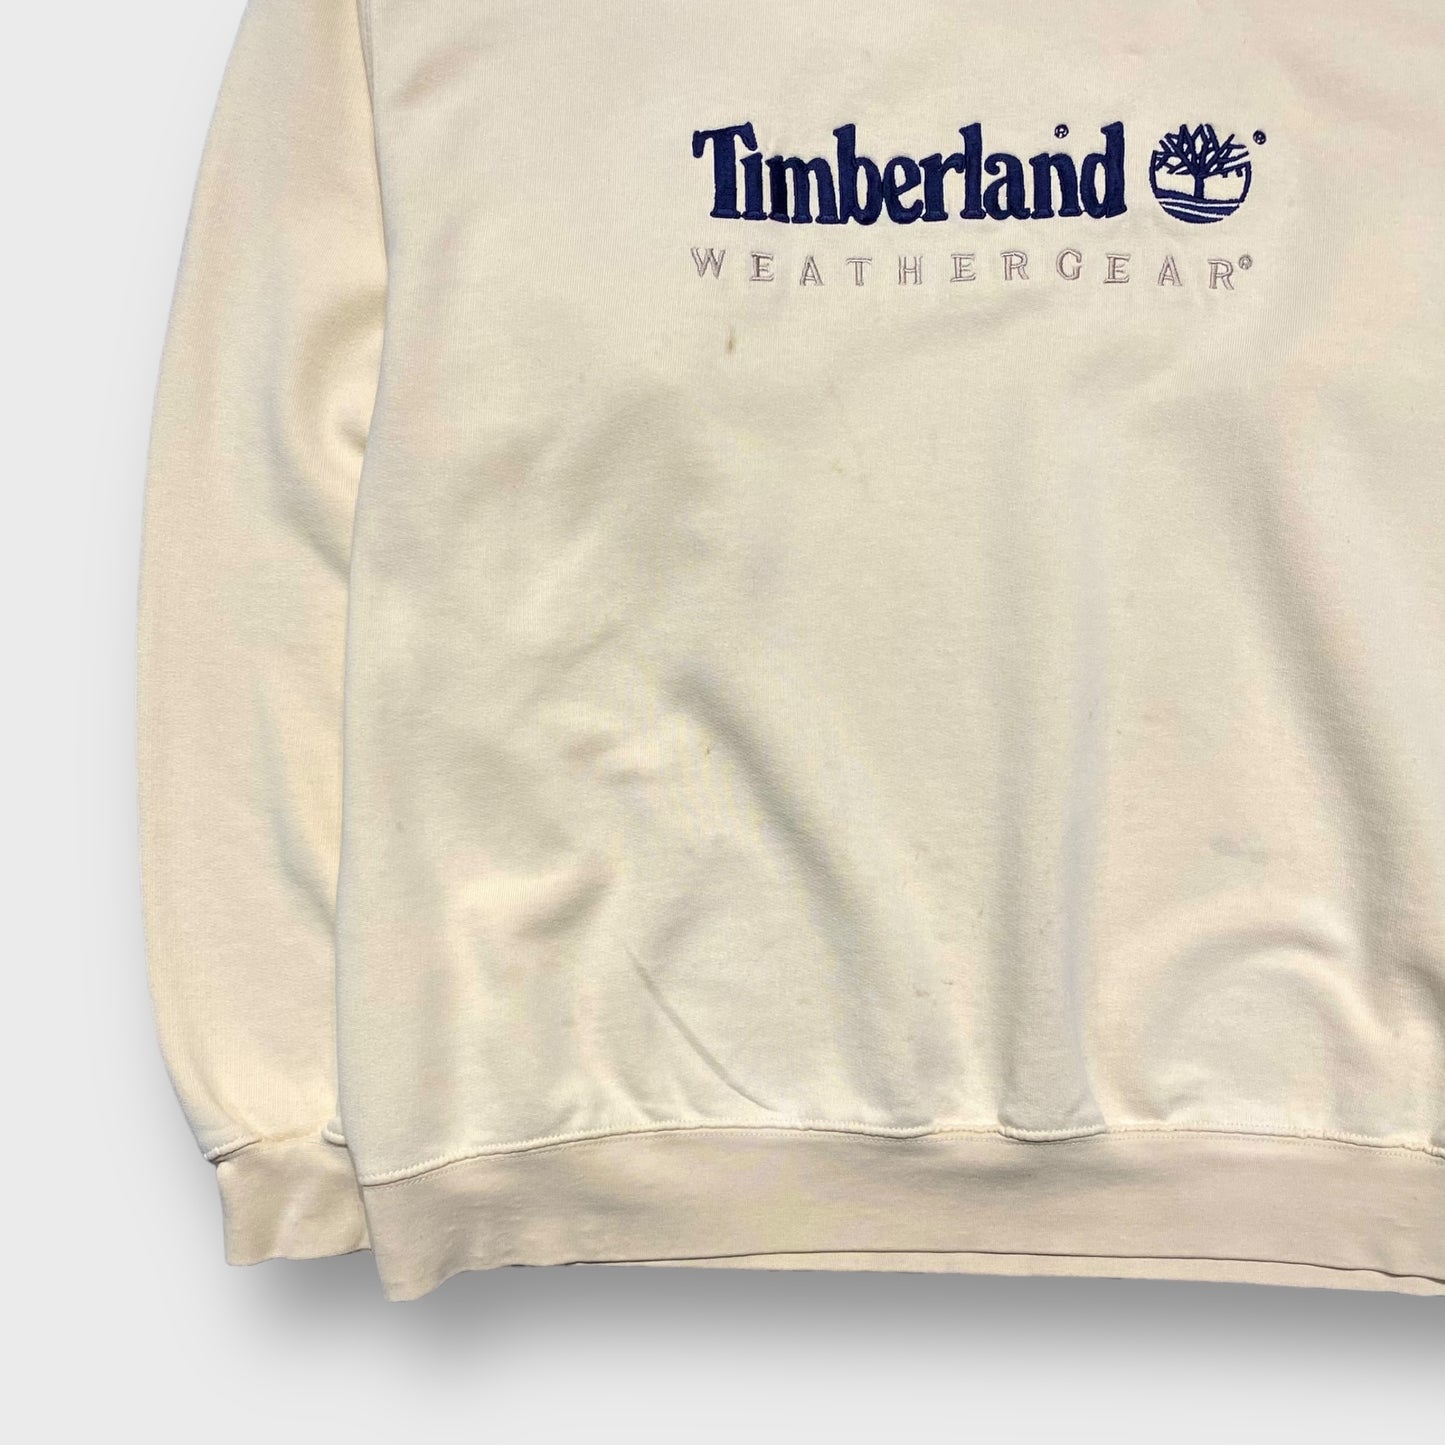 90's "Timberland" Logo design sweat